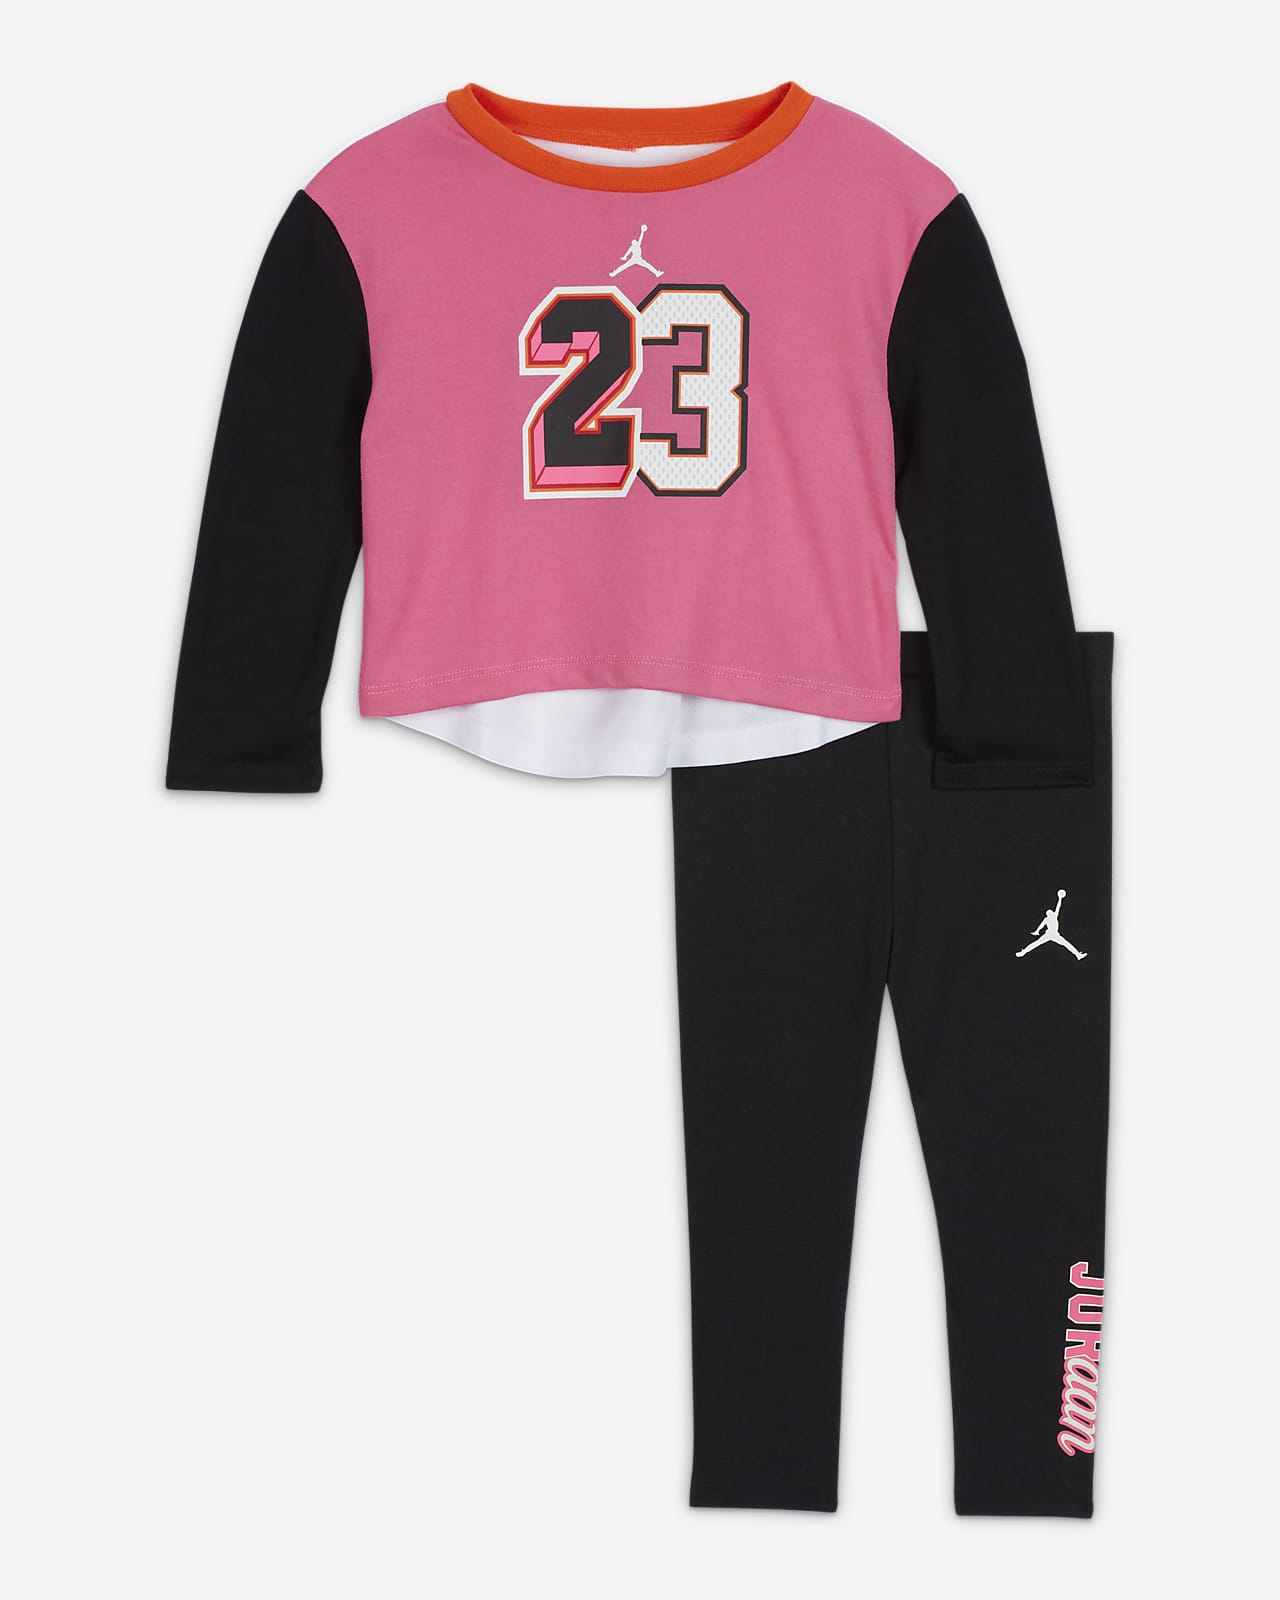 Jordan Baby (12-24M) Pink Pack Long Sleeve and Leggings Nike.com